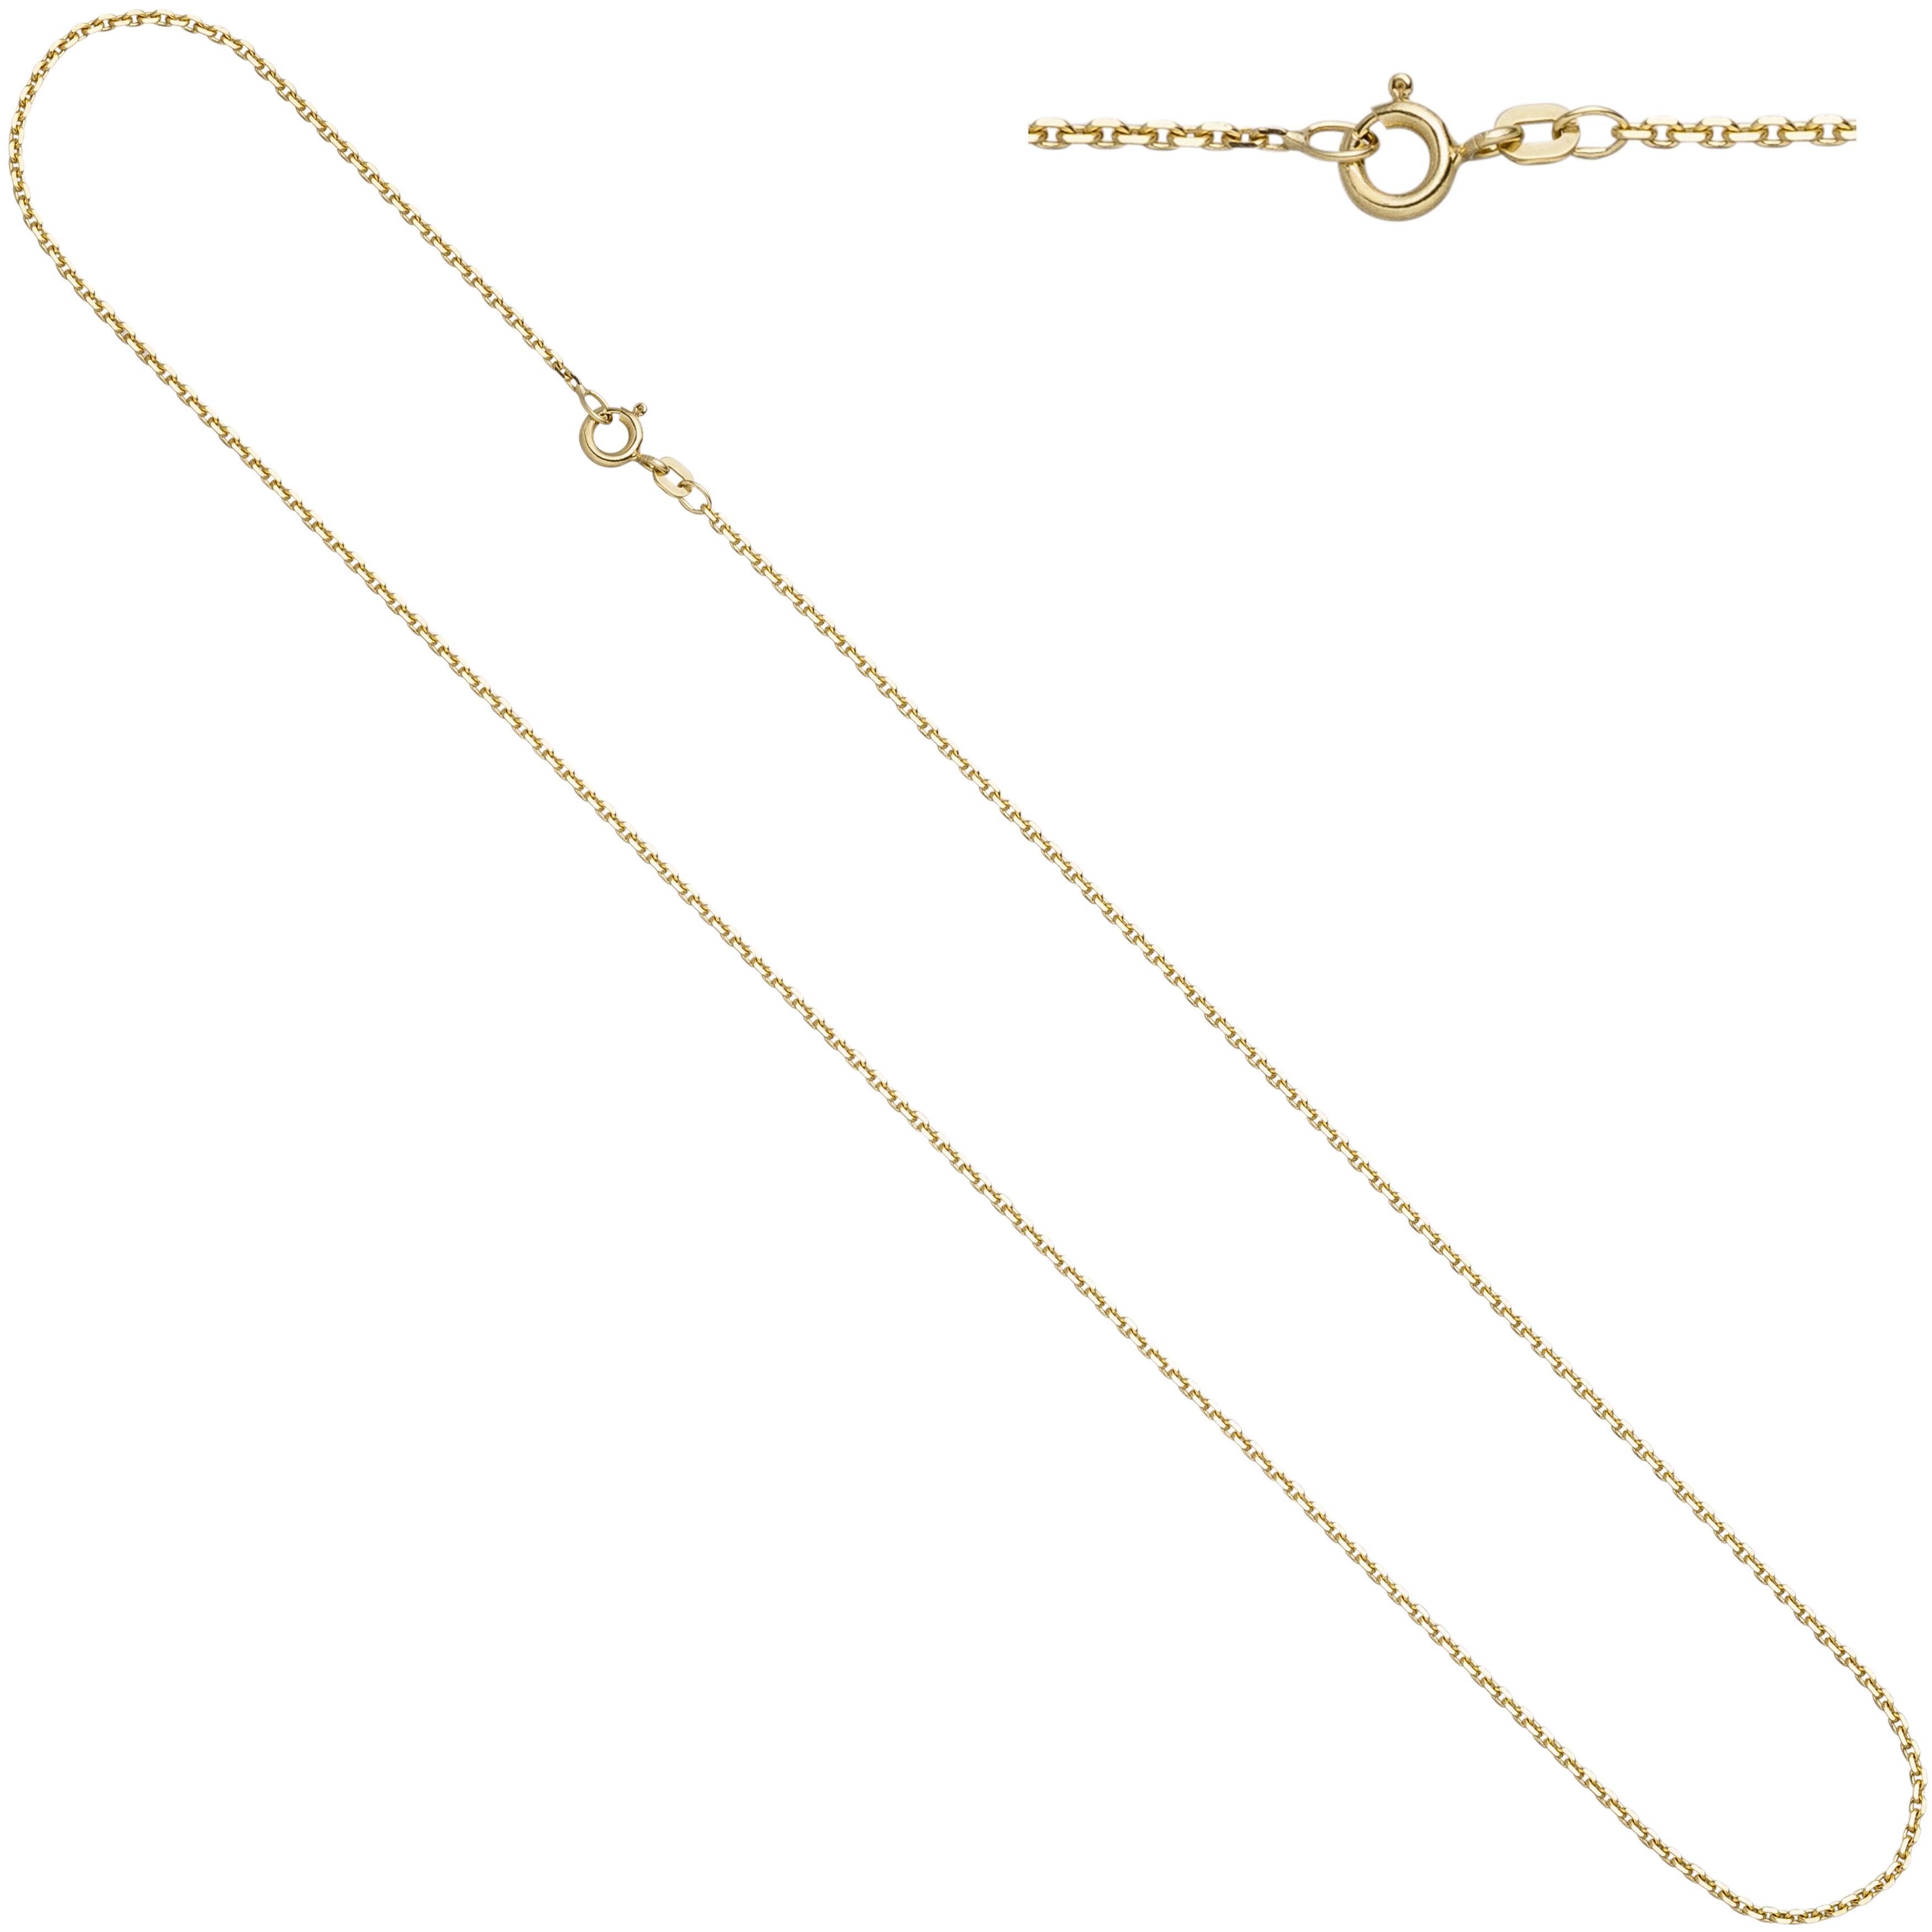 Ankerkette 333 Gelbgold 1,2 mm 36 cm Gold Kette Halskette Federring